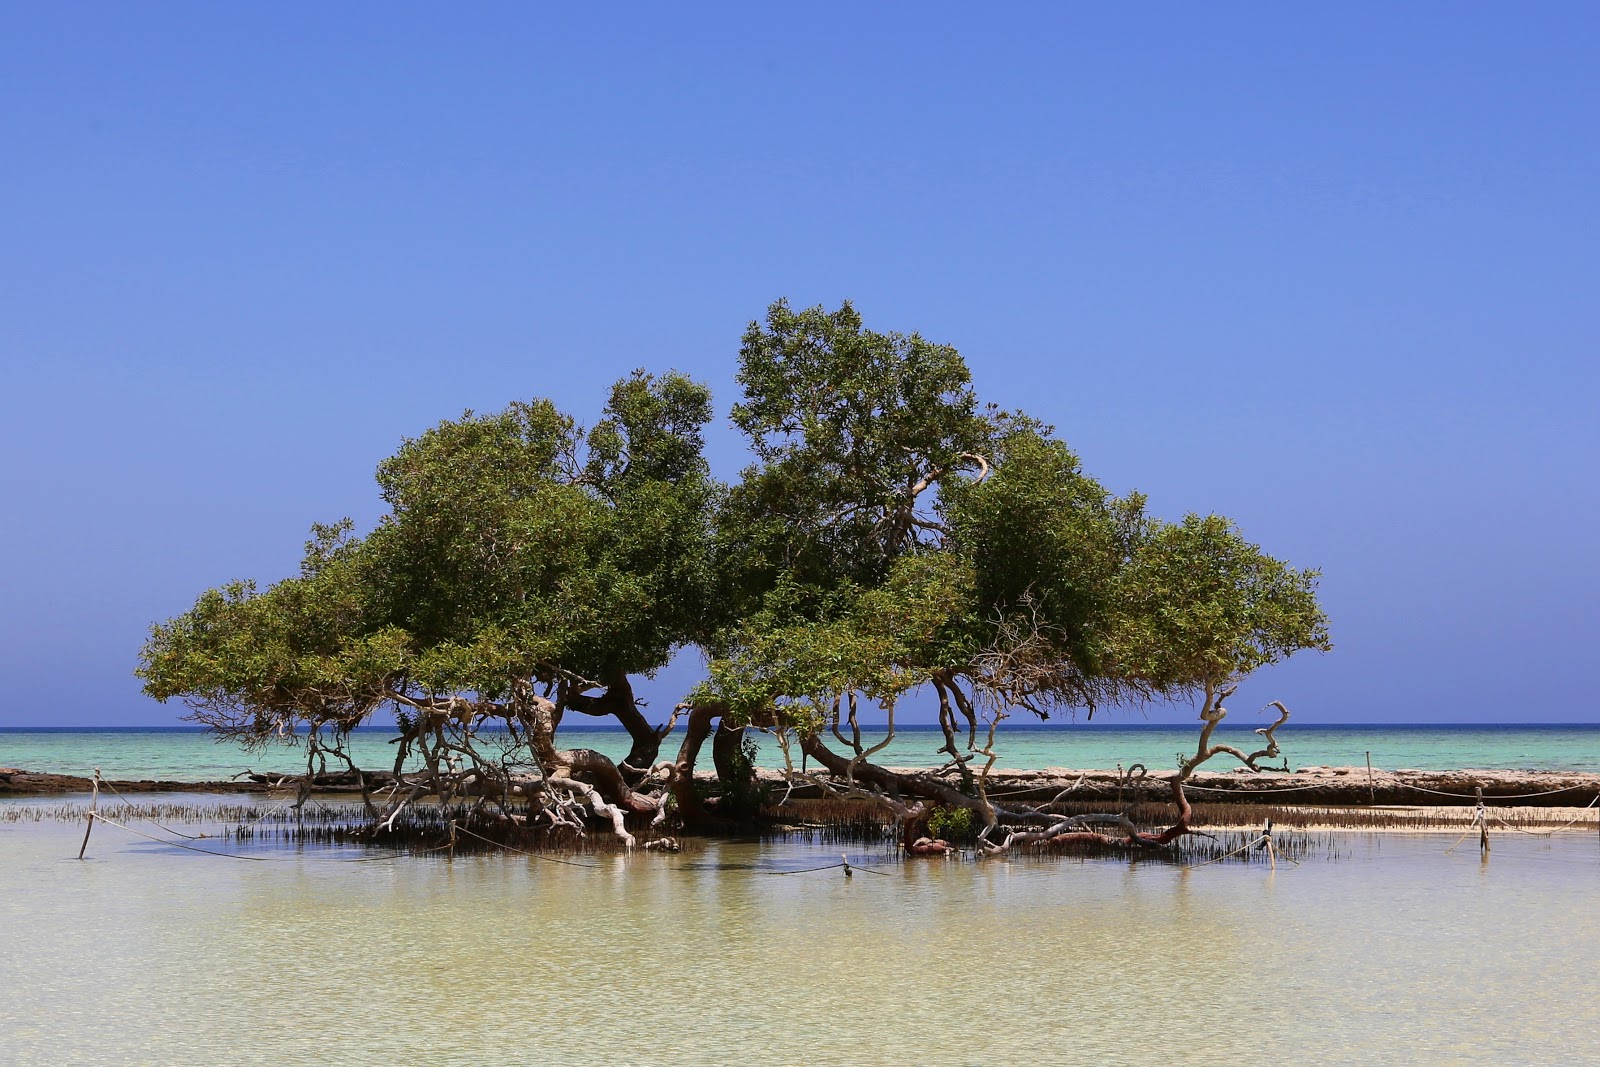 Fotografija Qulaan Mangrove Beach nahaja se v naravnem okolju